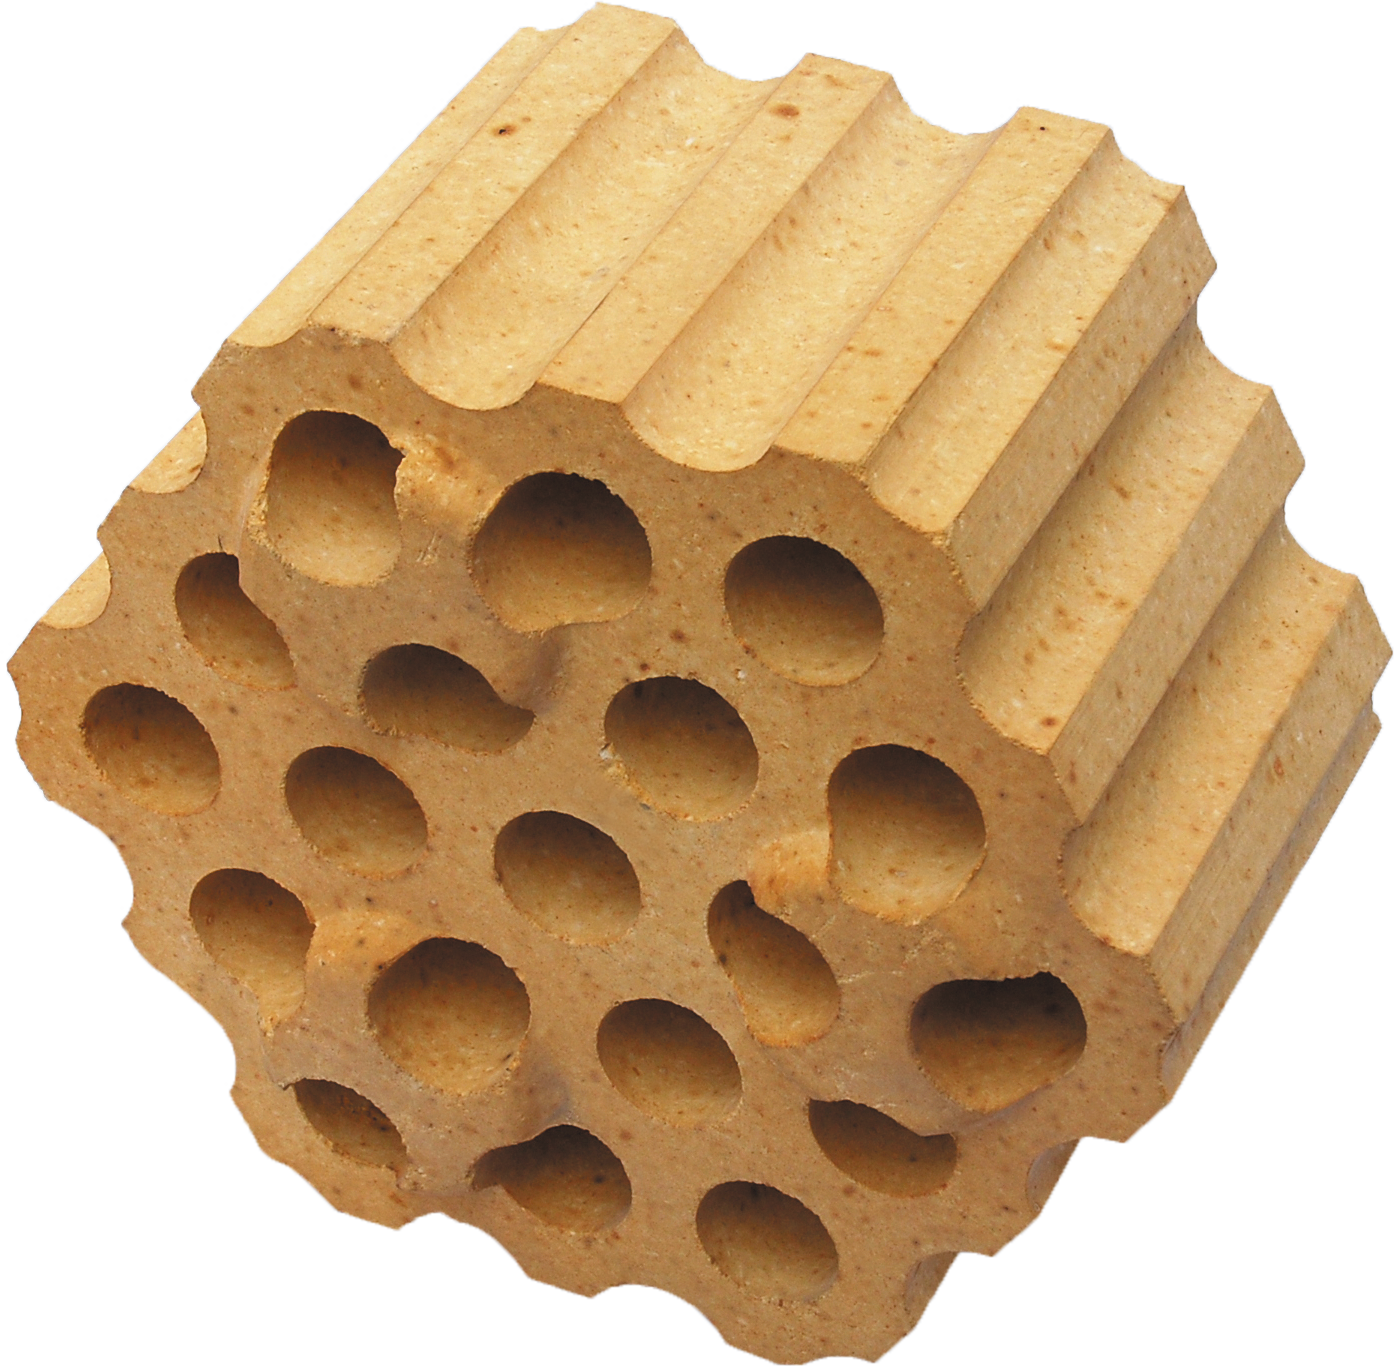 Fireclay checker brick